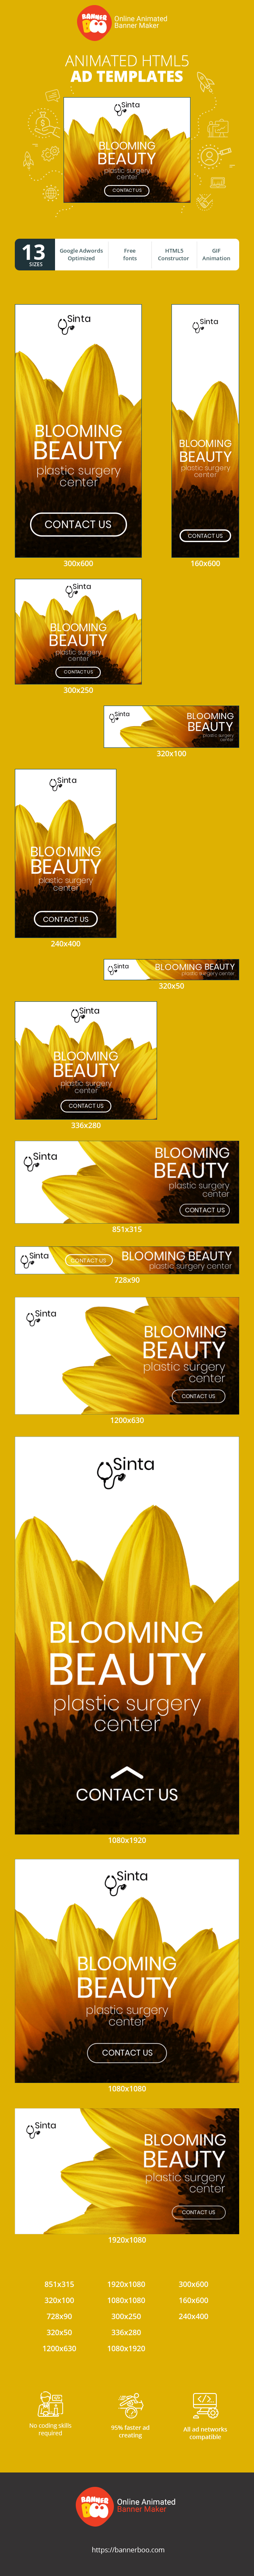 Szablon reklamy banerowej — Blooming Beauty — Plastic Surgery Center